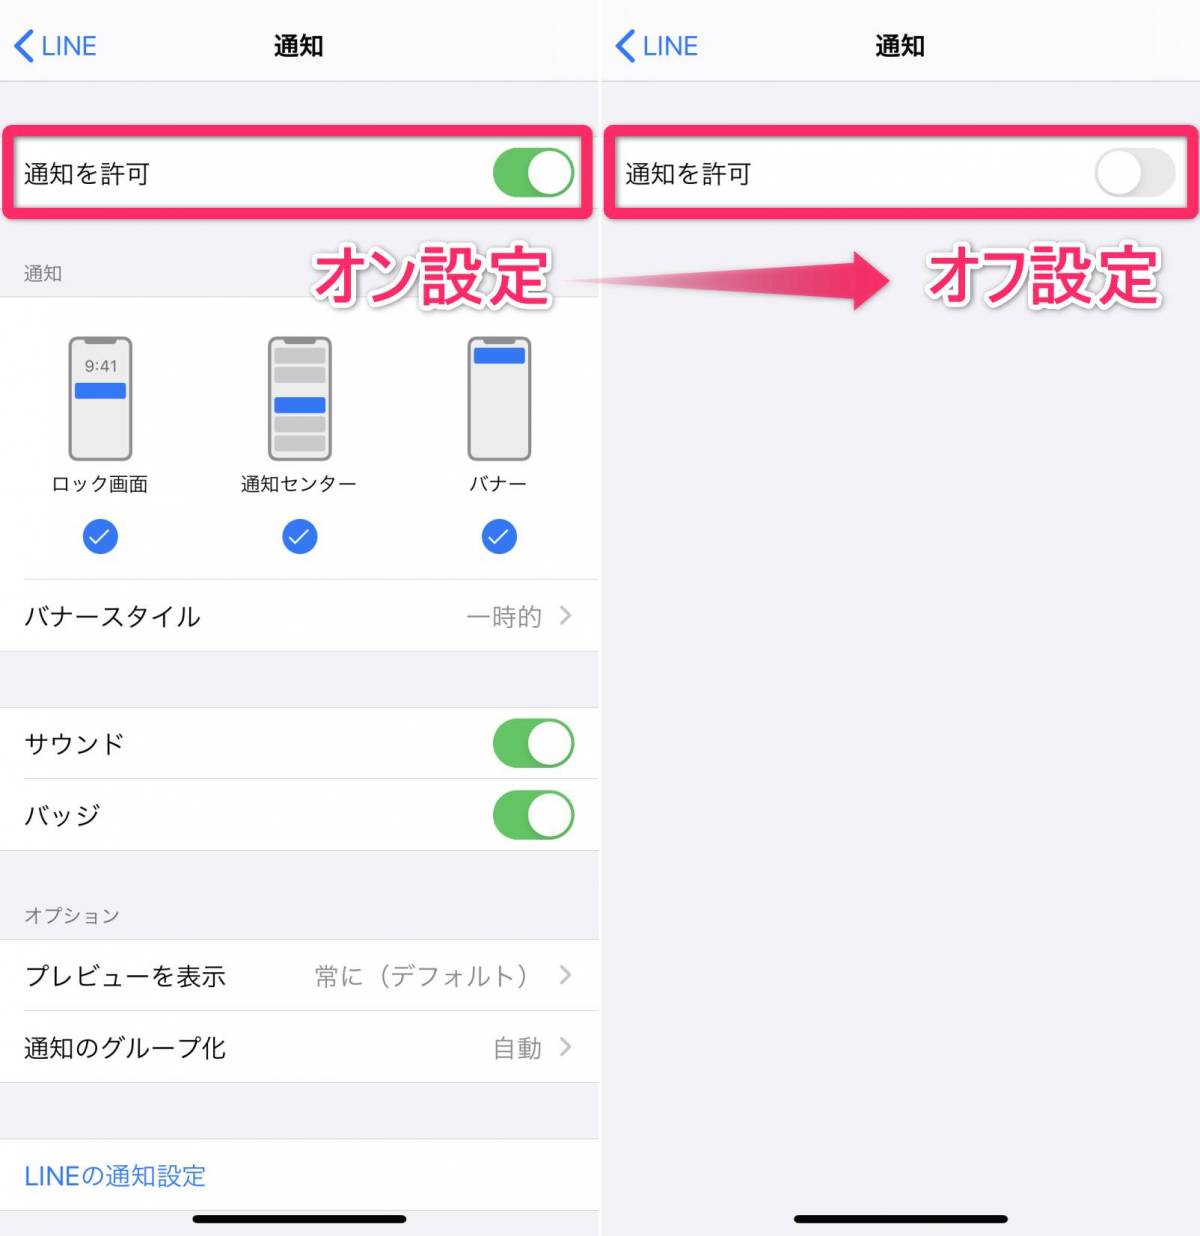 Iphone Lineのアカウント削除 退会方法 復活 復元は不可 代替手段あり Appliv Topics